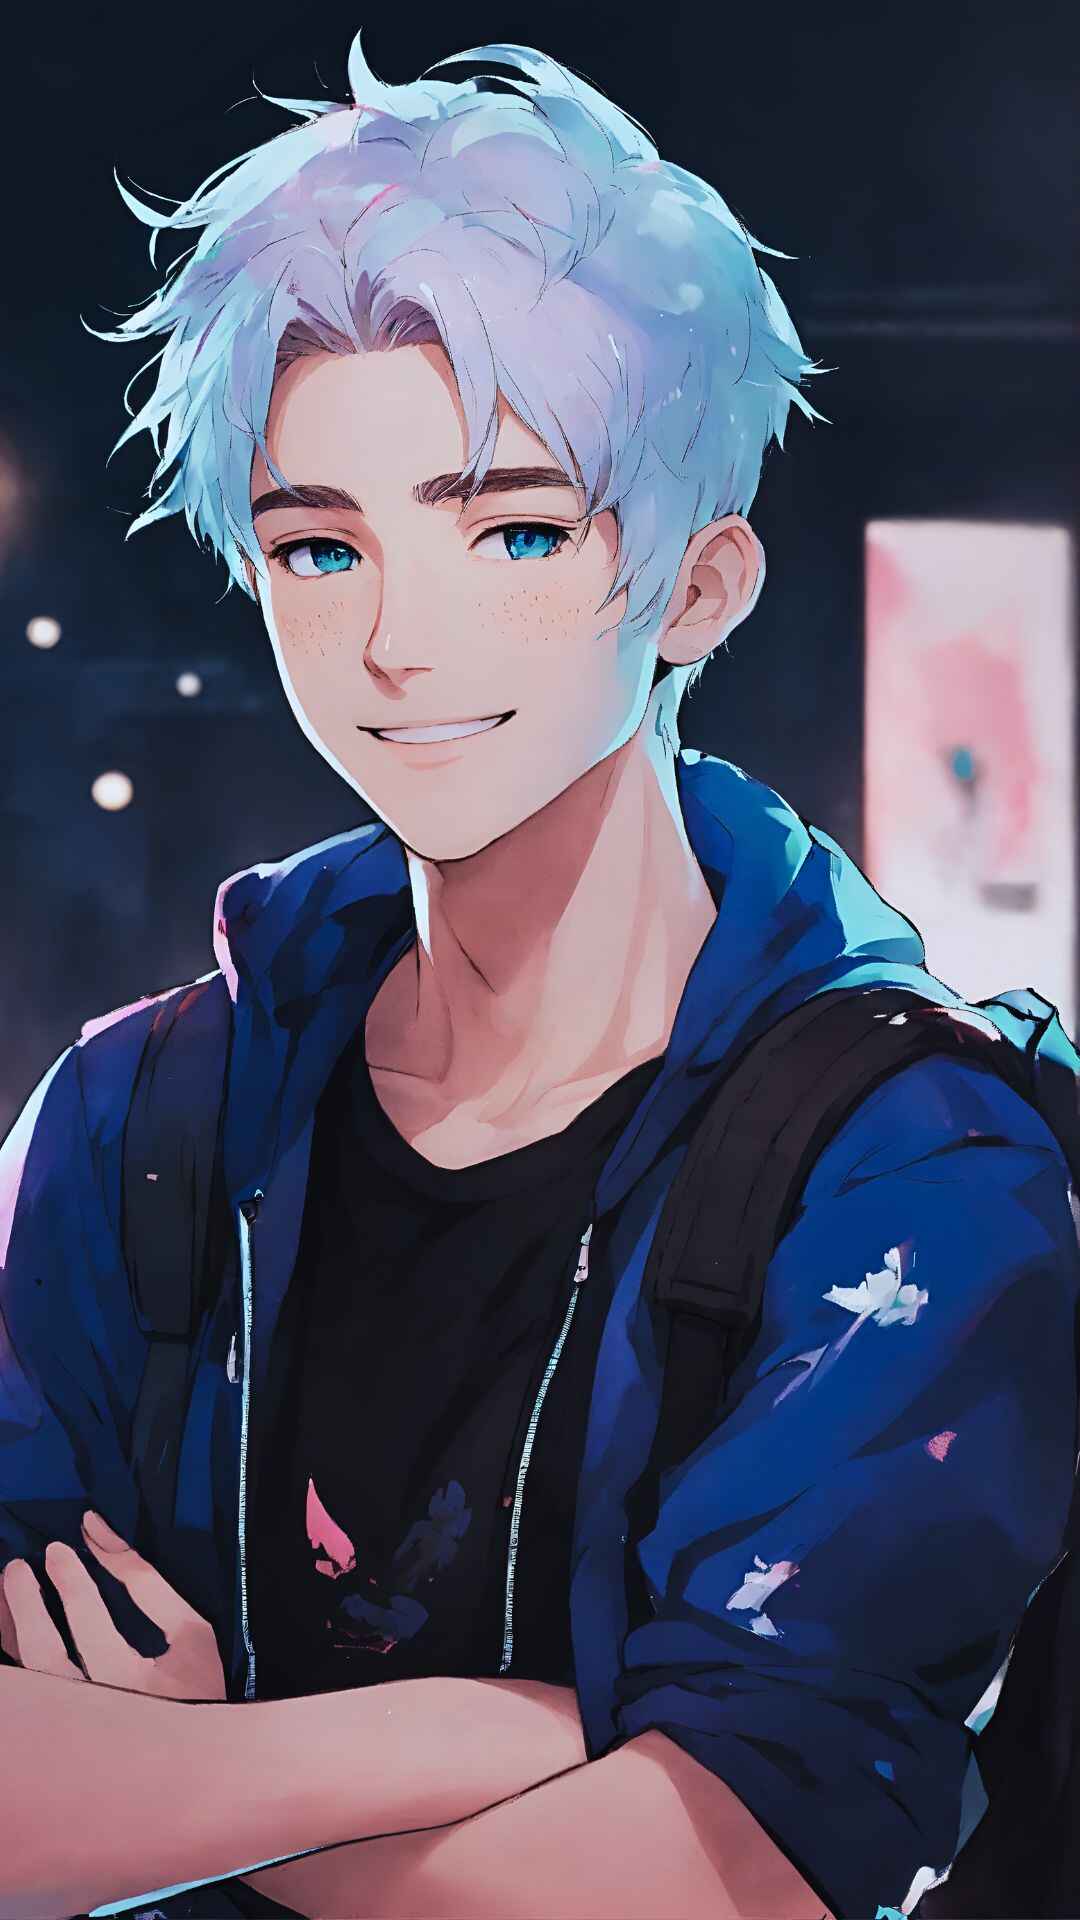 Backgrounds Cute Anime Boy Wallpaper